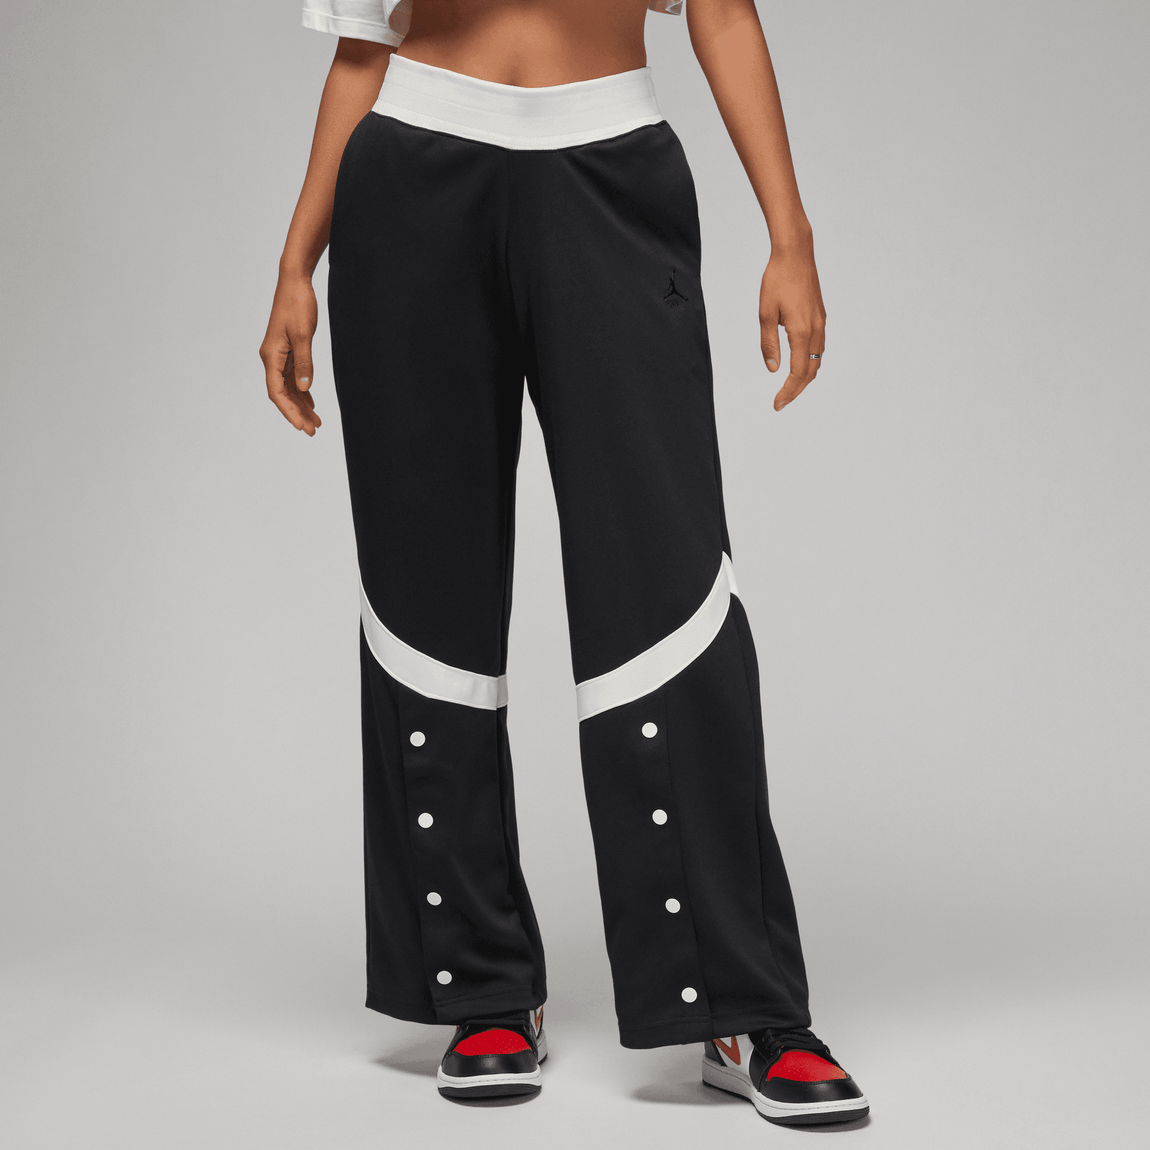 Nike Women's Jordan (Her)itage Suit Pants (Black/Sail) - Nike Women's Jordan (Her)itage Suit Pants (Black/Sail) - 